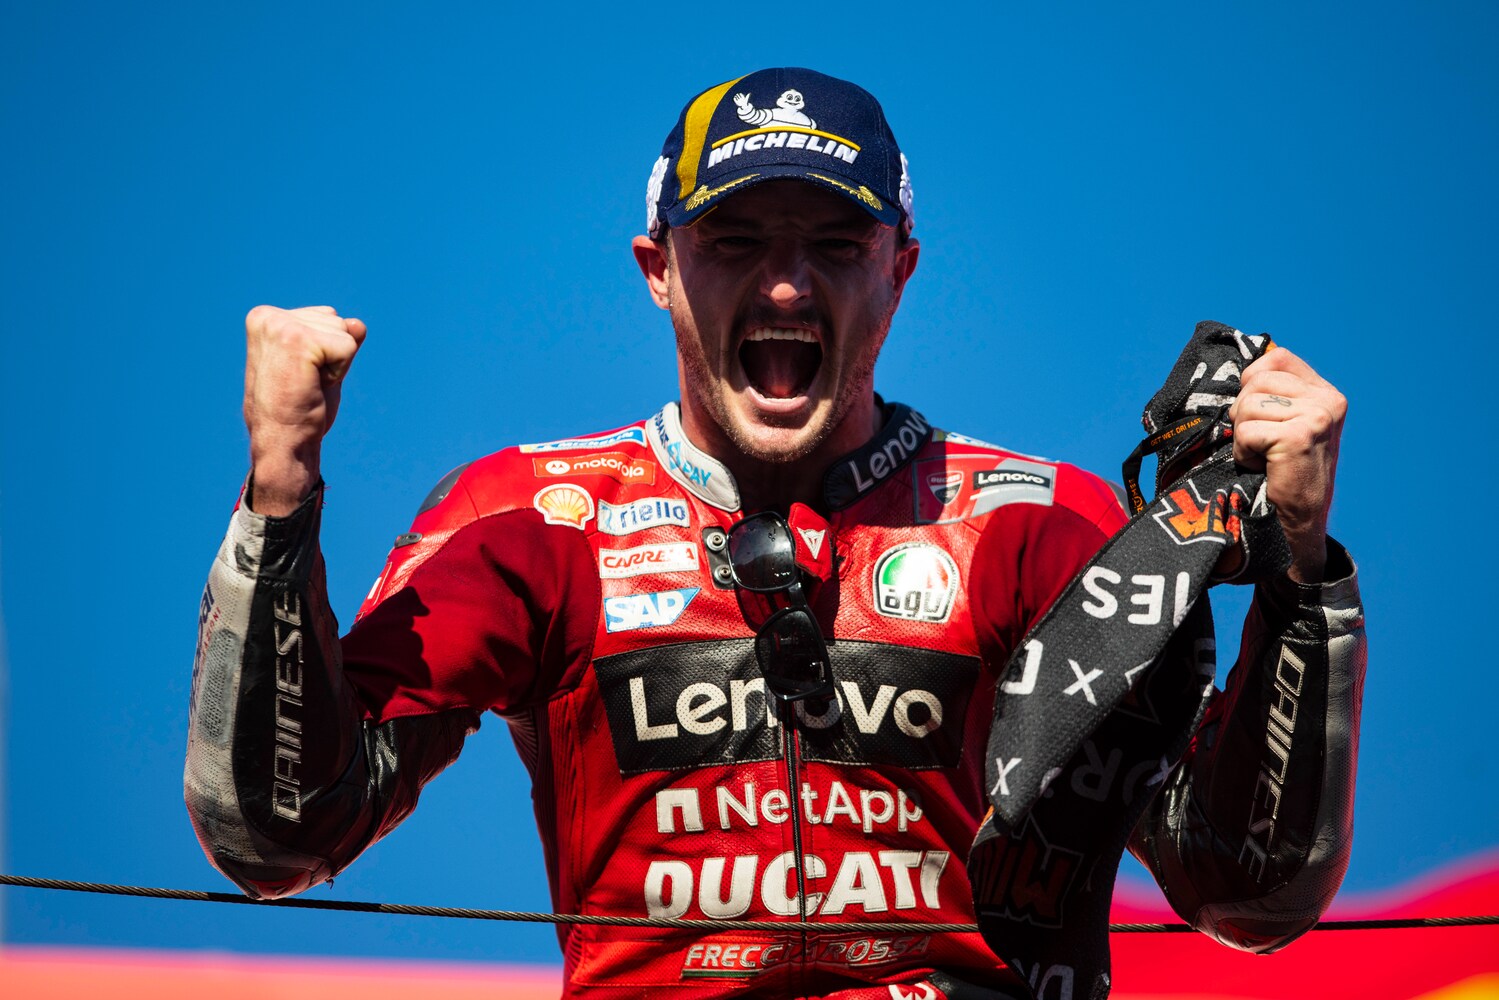 InsideRACING Jack Miller dominates the Japanese GP in Motegi